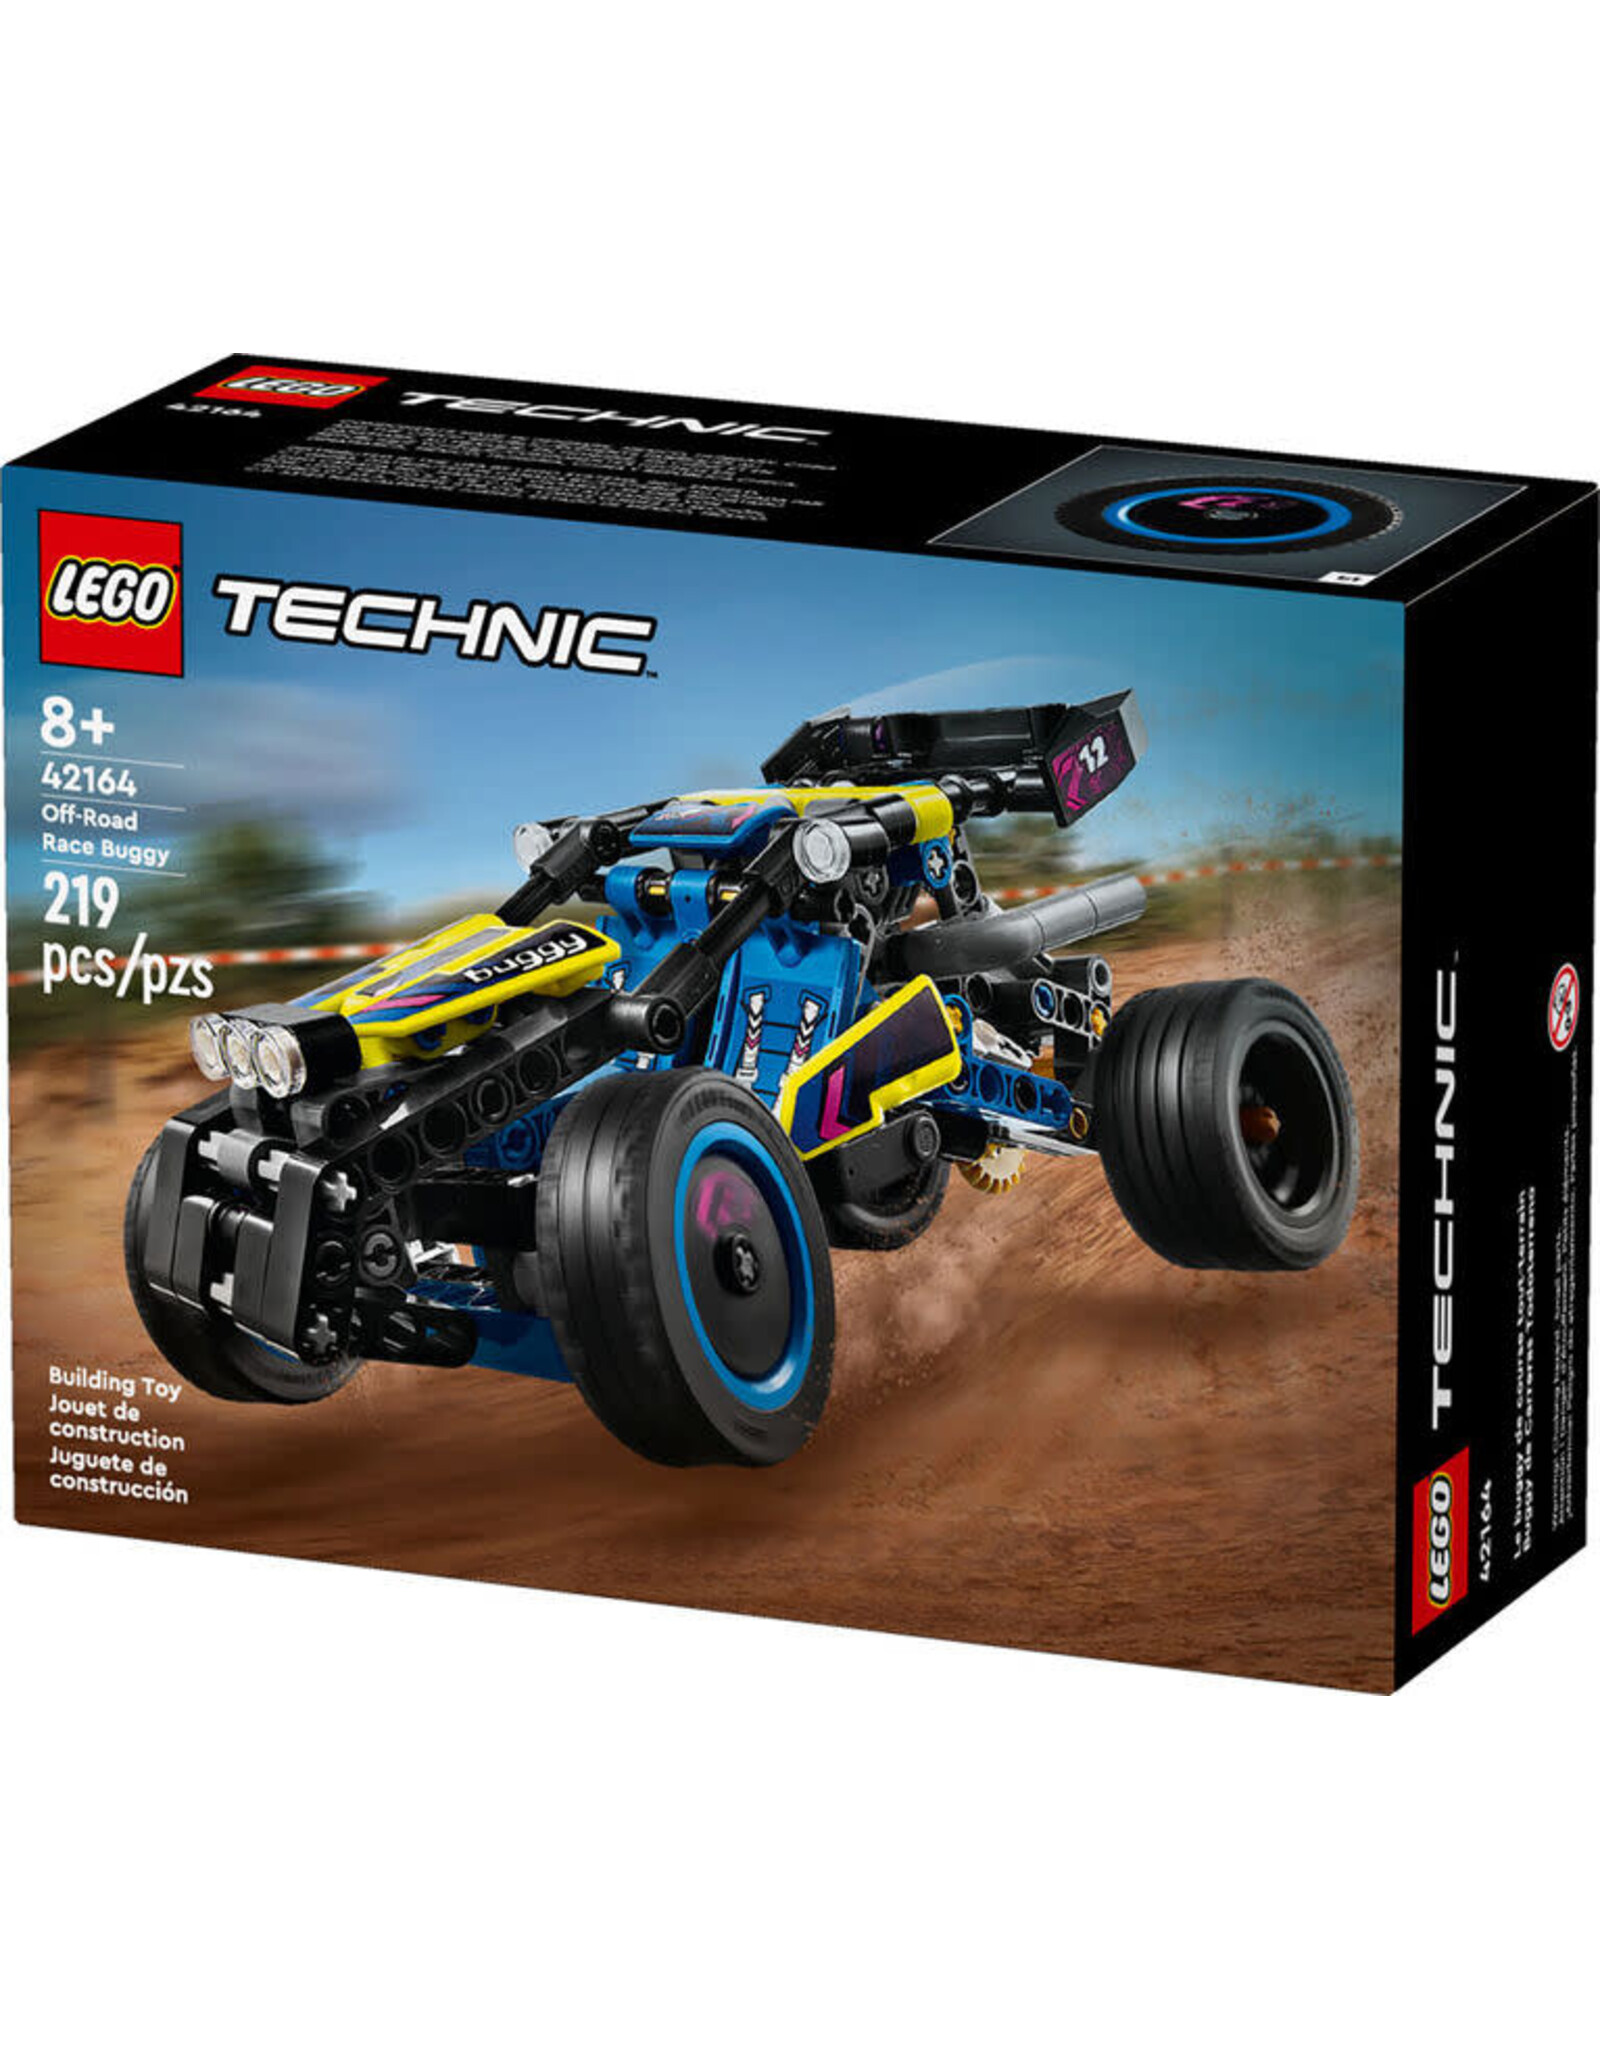 Lego Off-Road Race Buggy